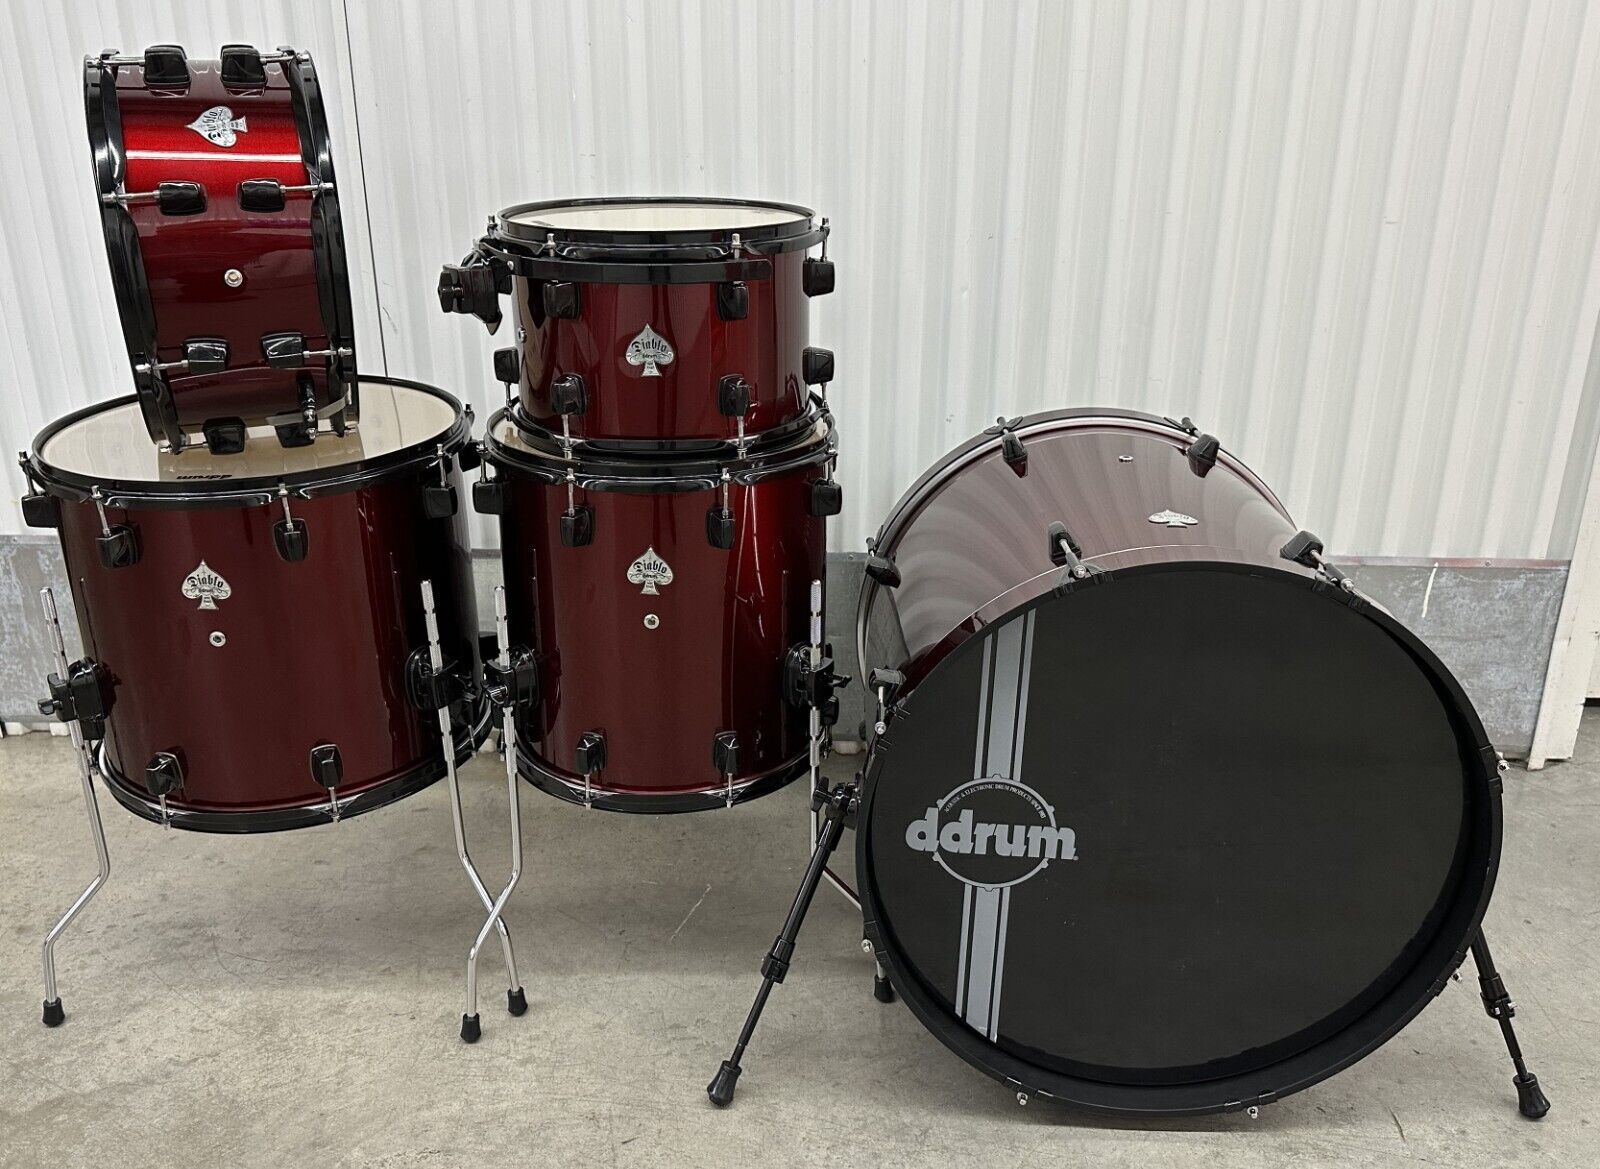 ddrum 5Pc Drum Set Shell Pack Kit Diablo Red / Black 6